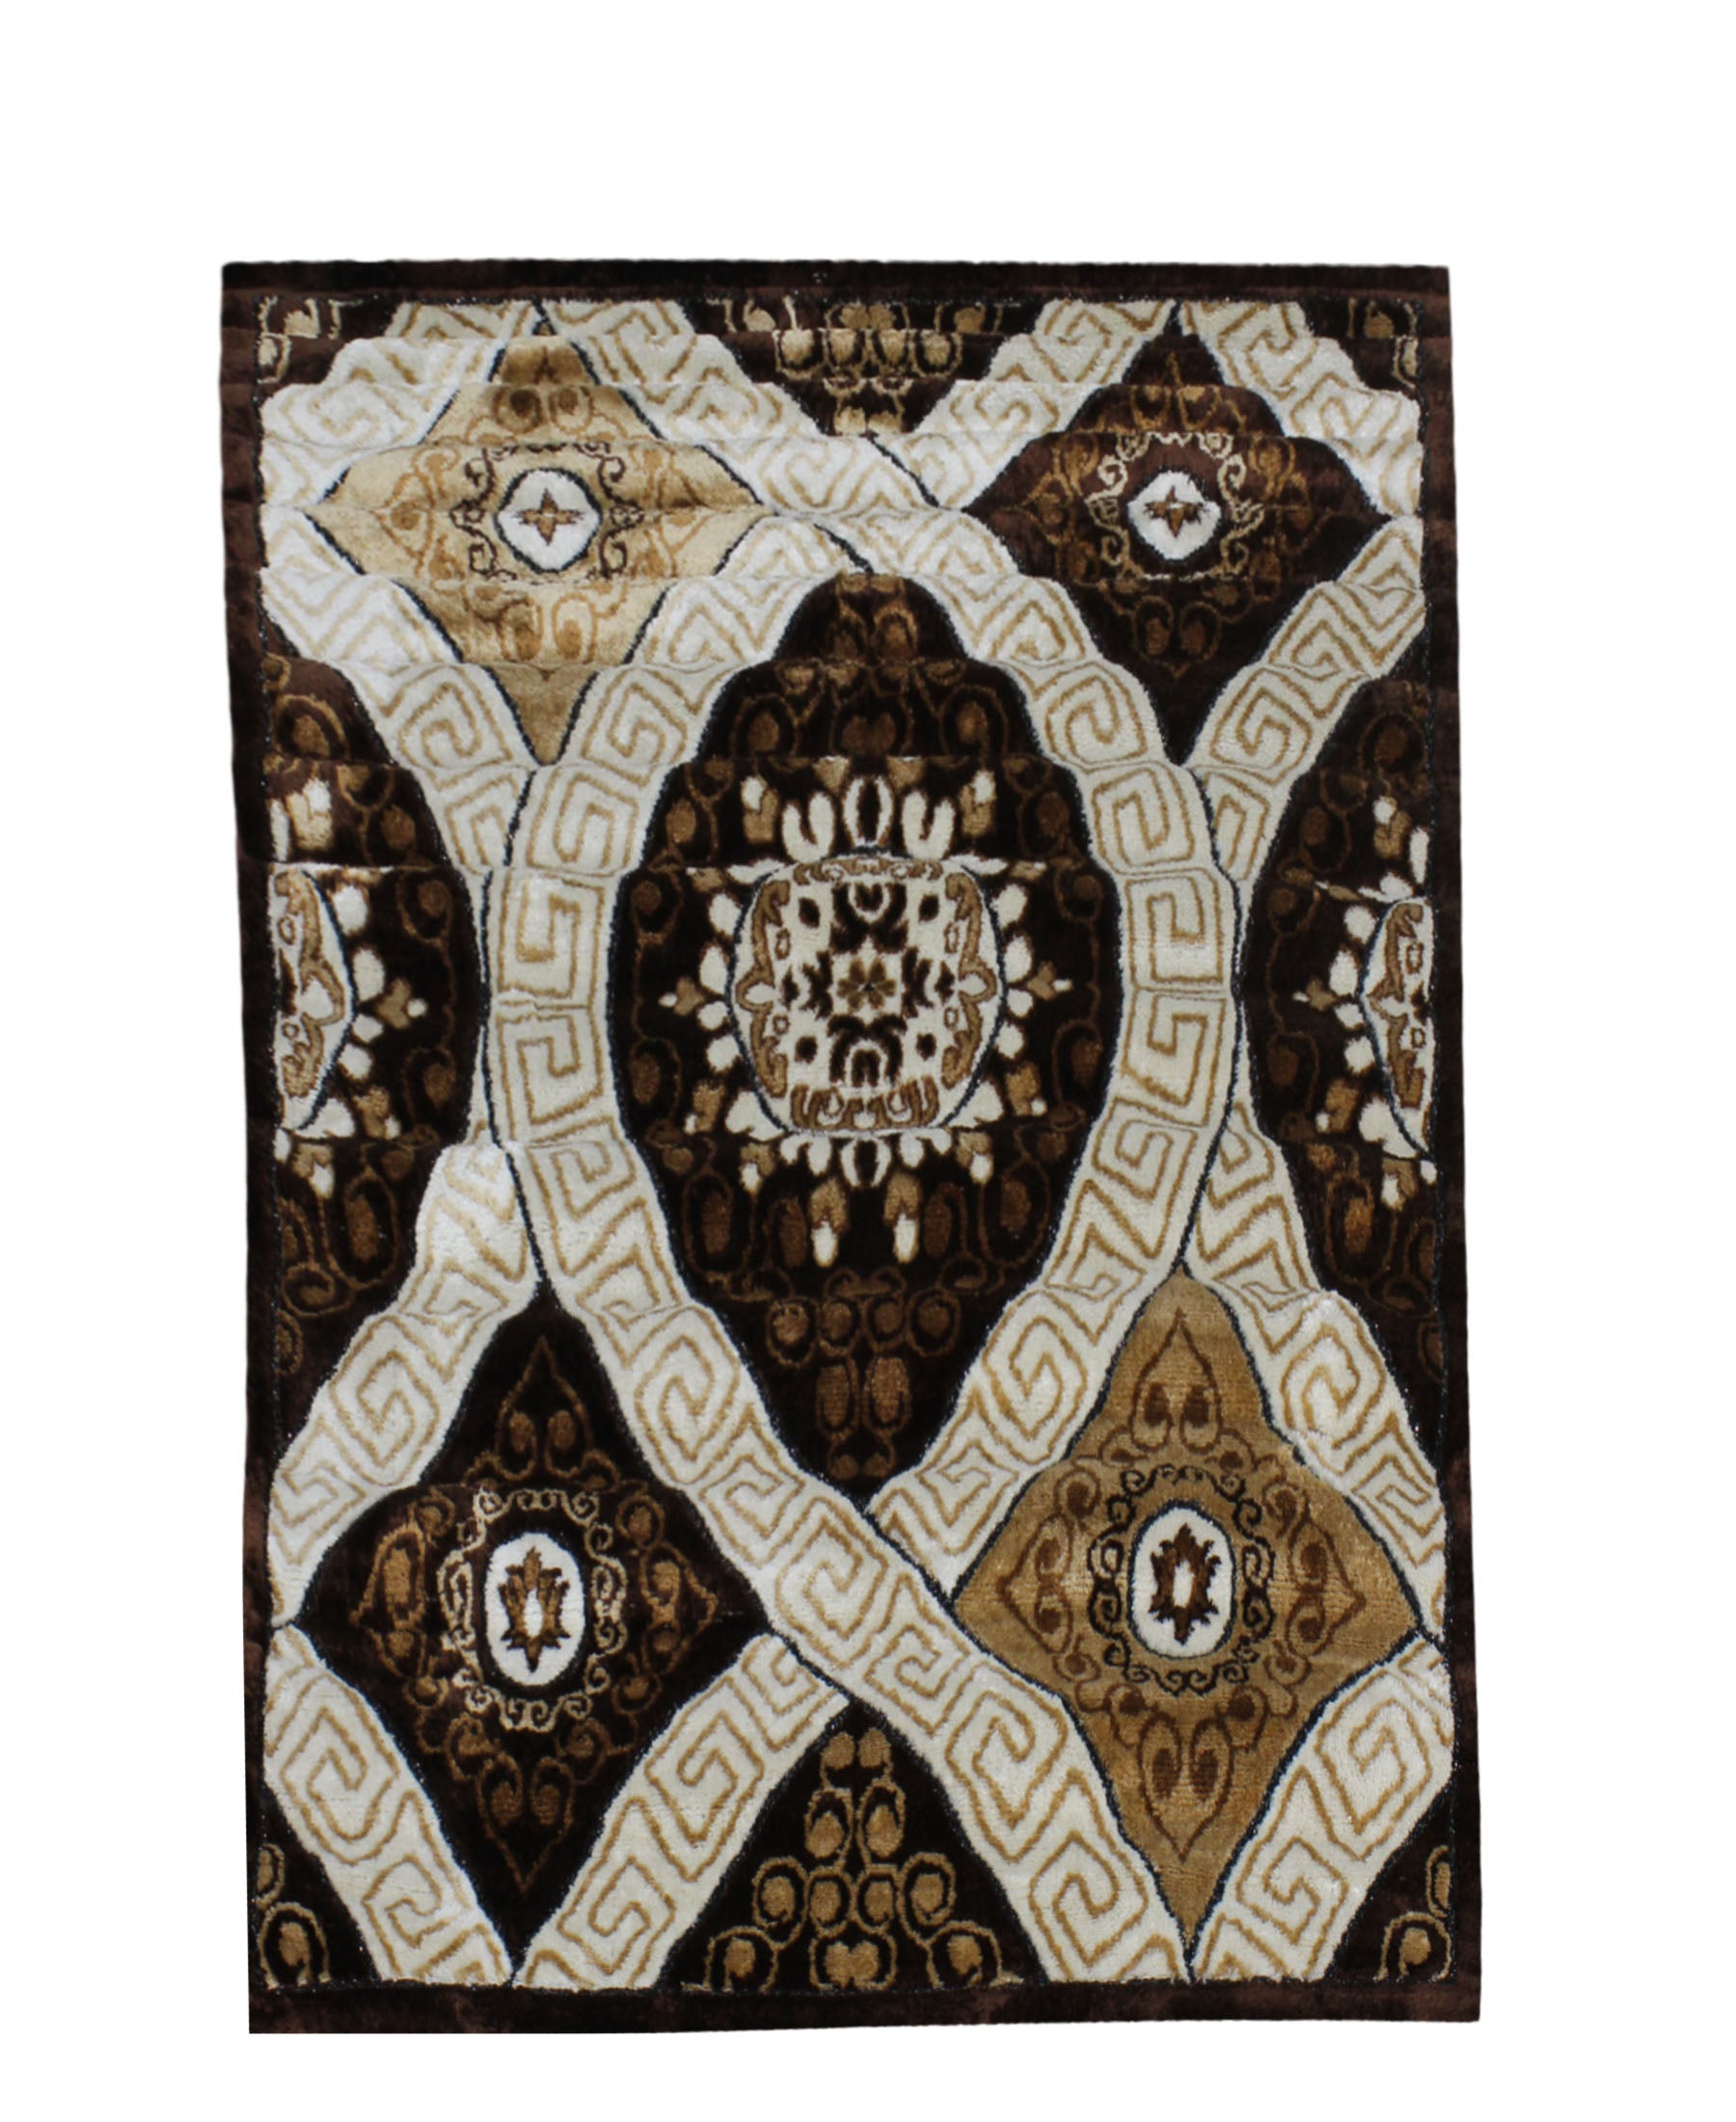 Izmir  Diamond Cross Carpet 1500mm x 2000mm - Chocolate